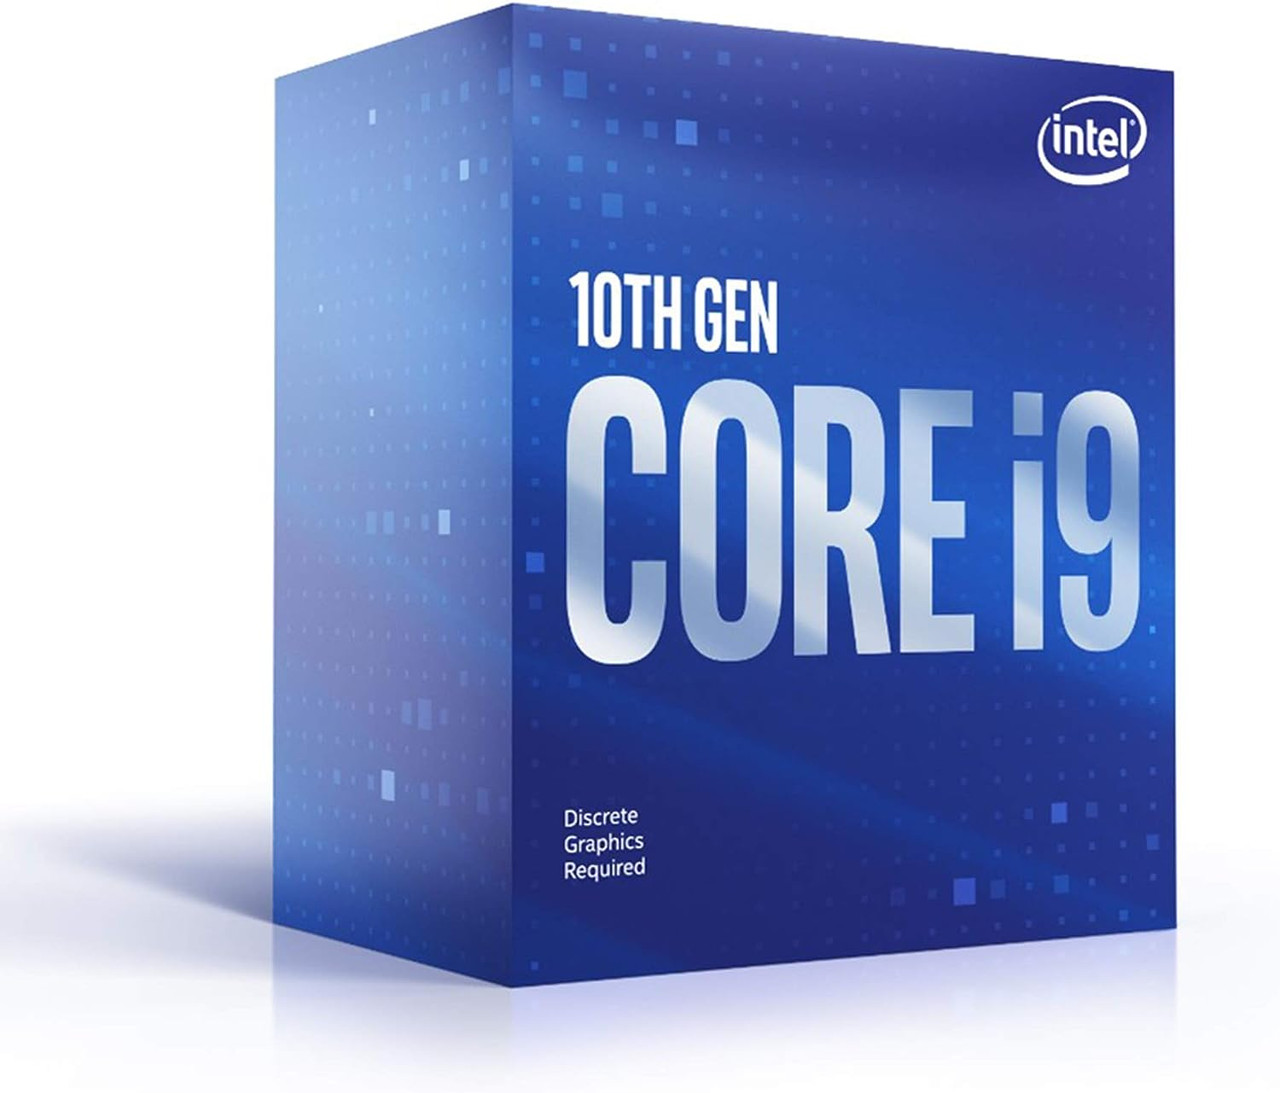 Intel Core i9-10900F Processor (10th Gen) 10-Core 2.8GHz LGA1200 65W Desktop CPU BX8070110900F